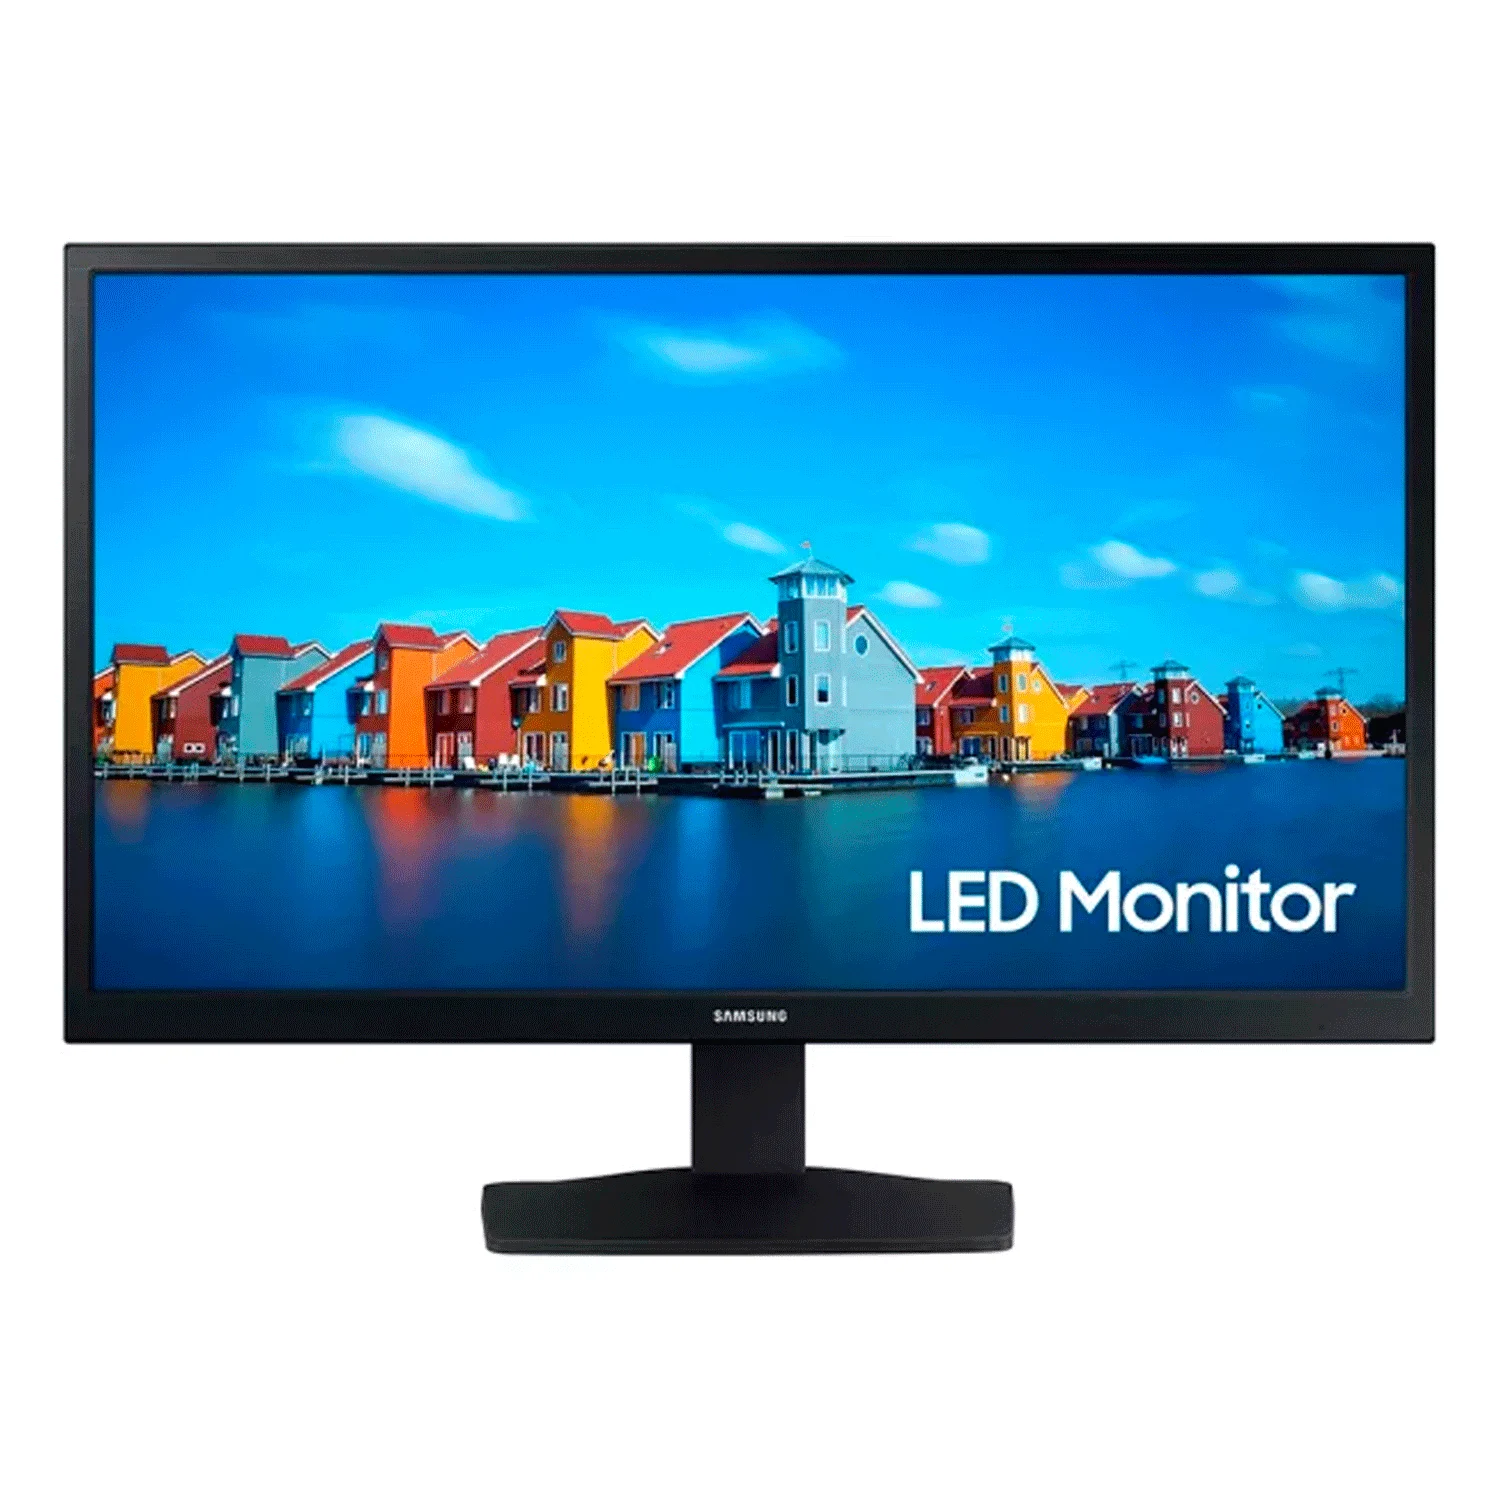 Monitor Samsung 19" / VGA / HDMI - Preto (LS19A330NHLXZ)